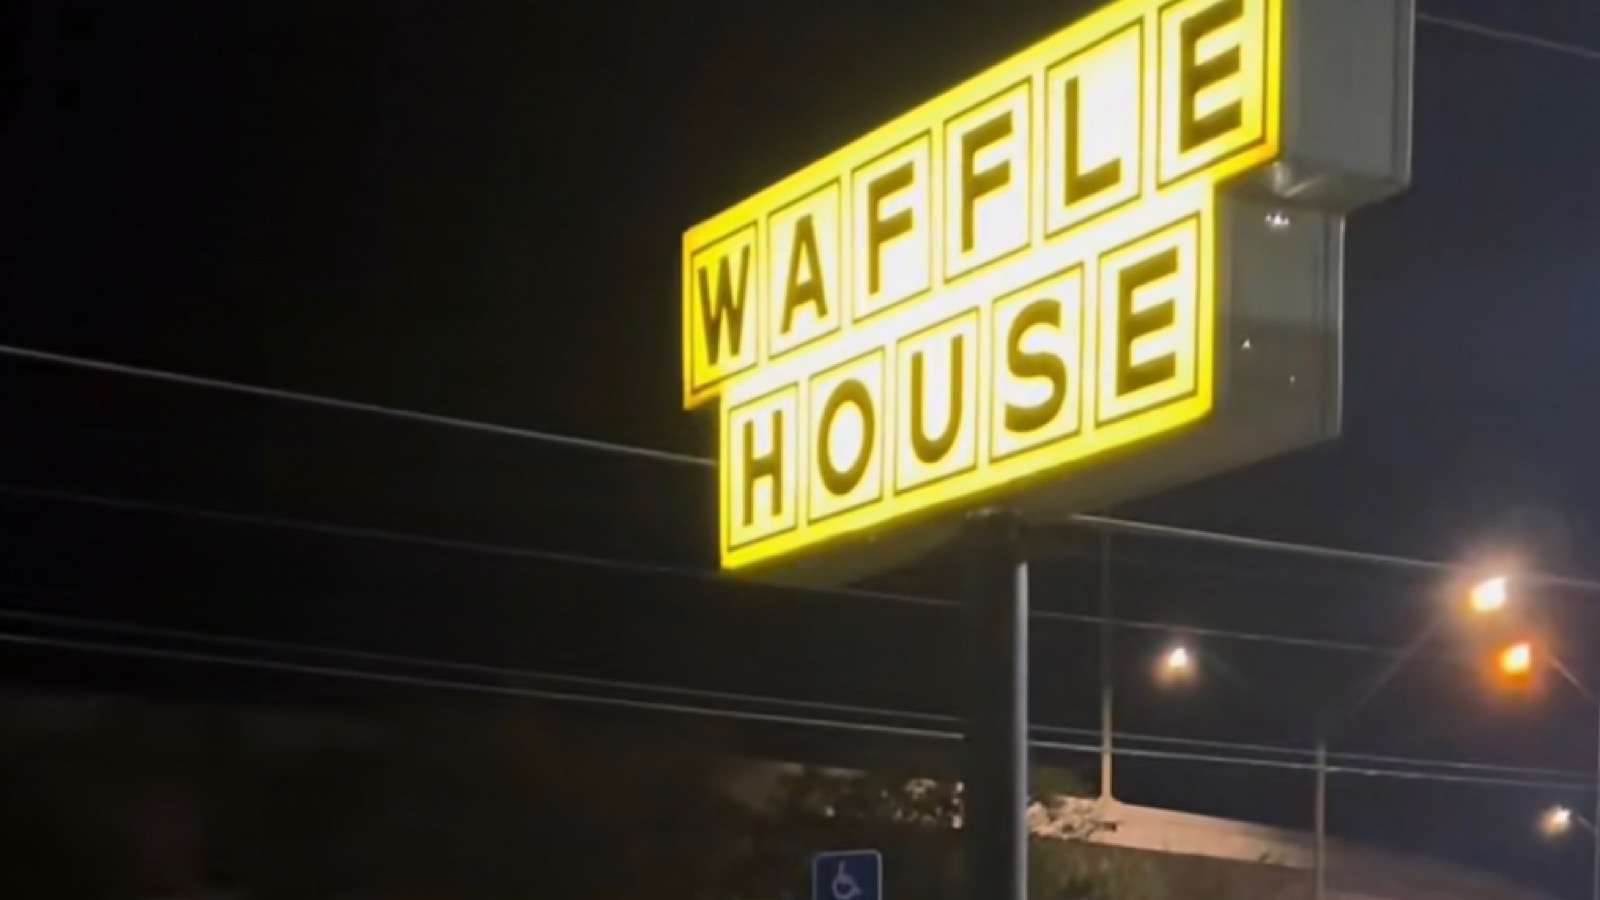 A Waffle House sign